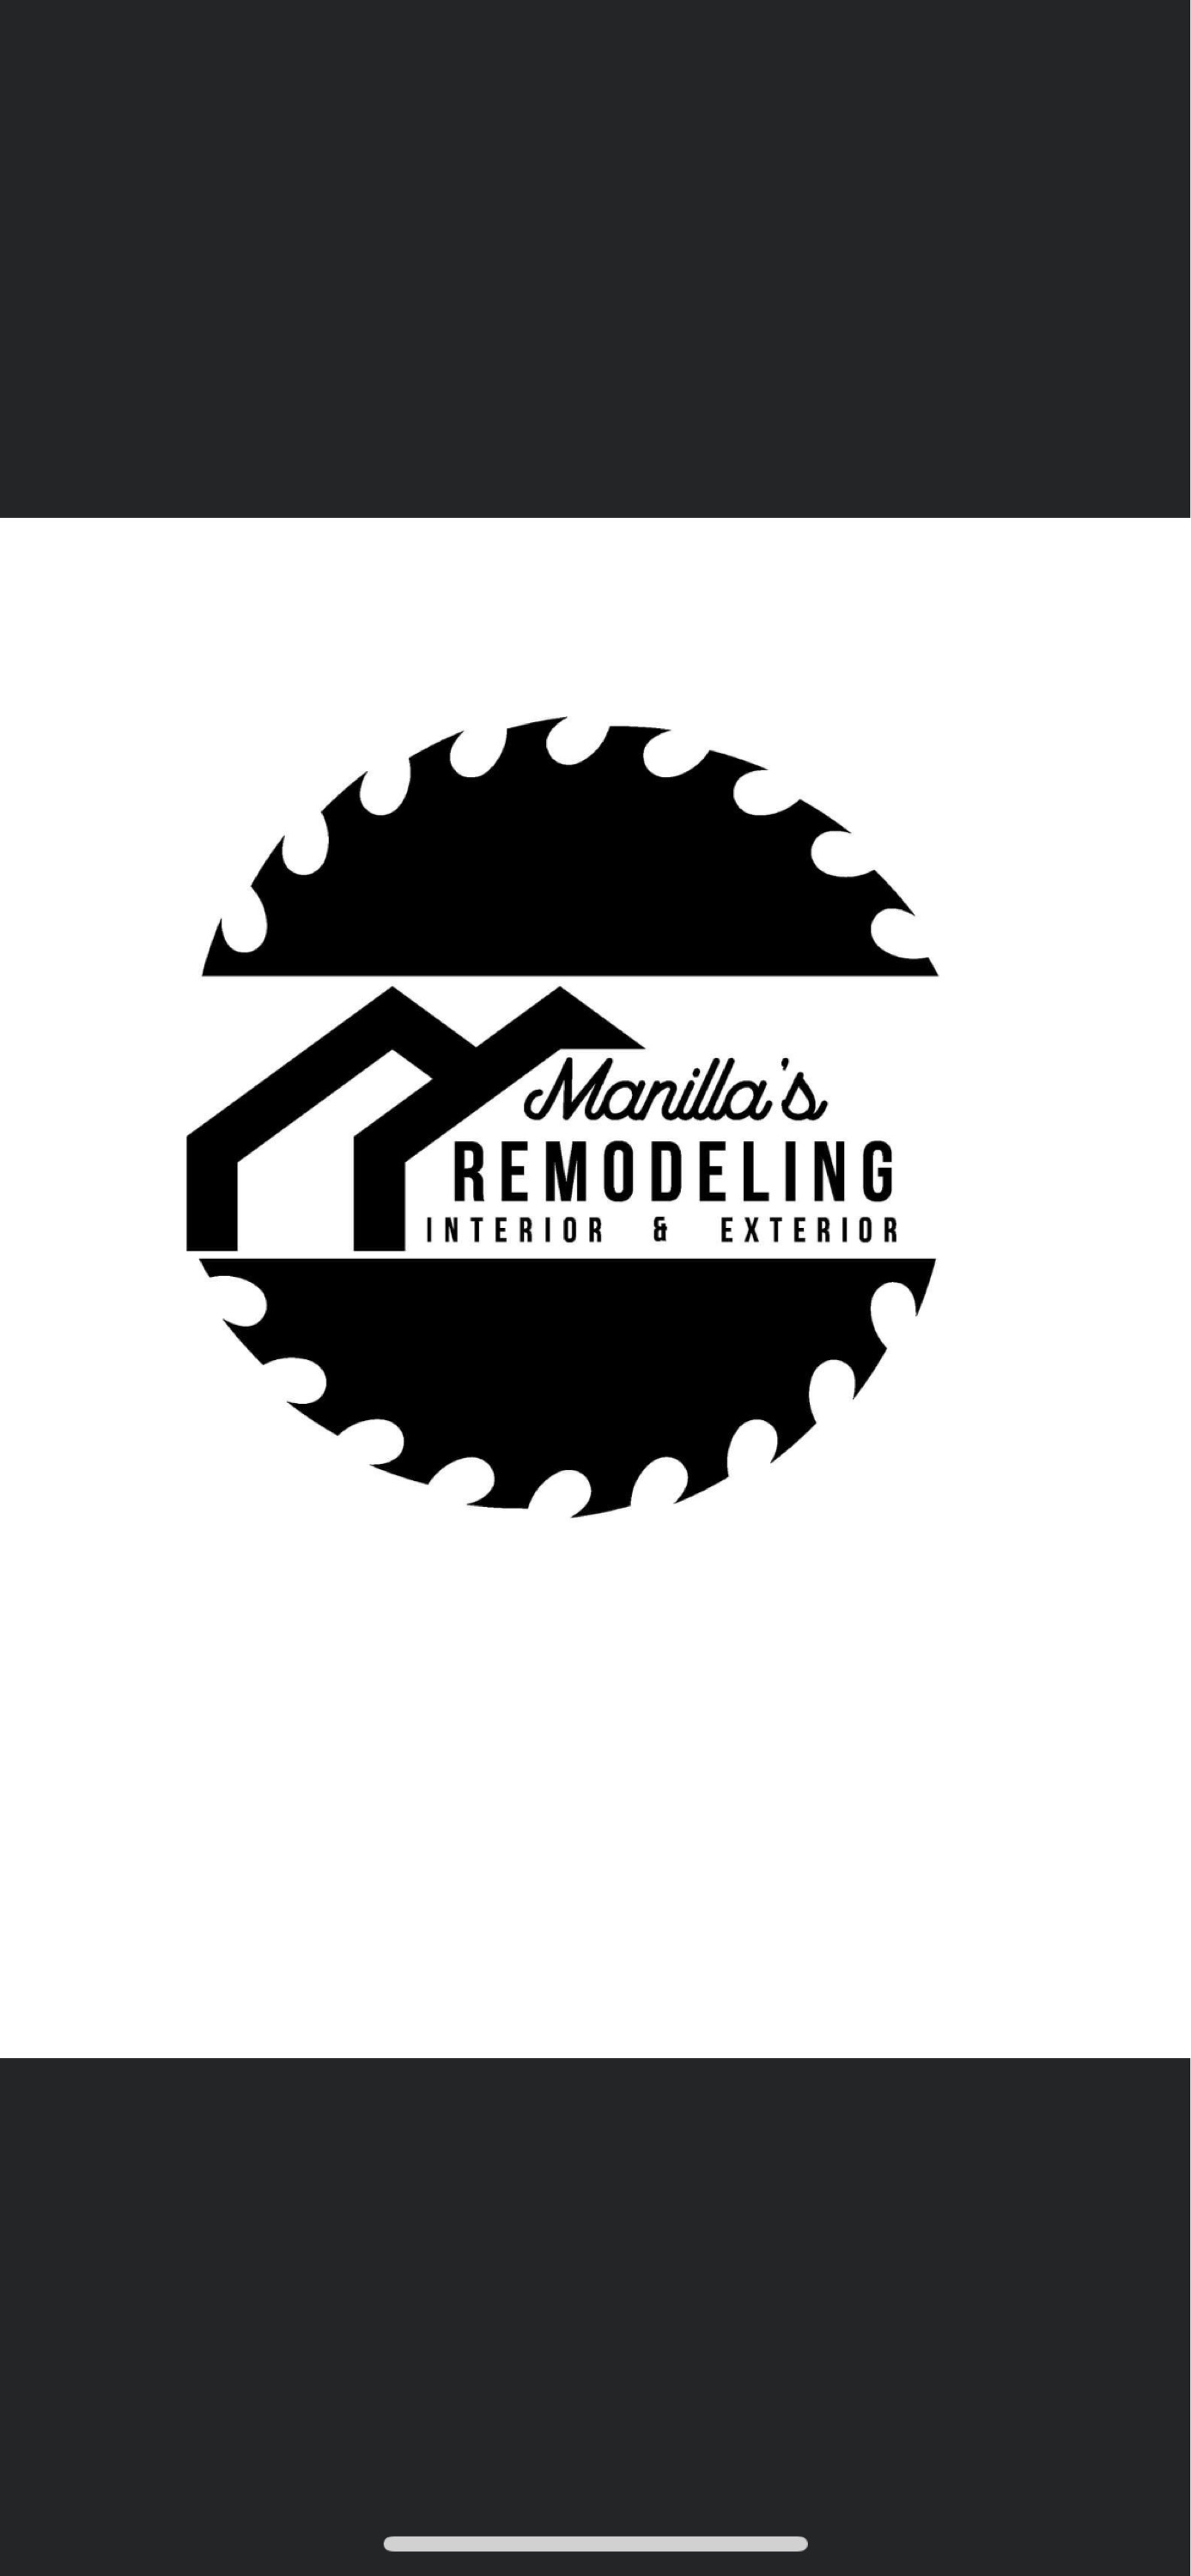 Manilla's Remodeling, LLC Logo